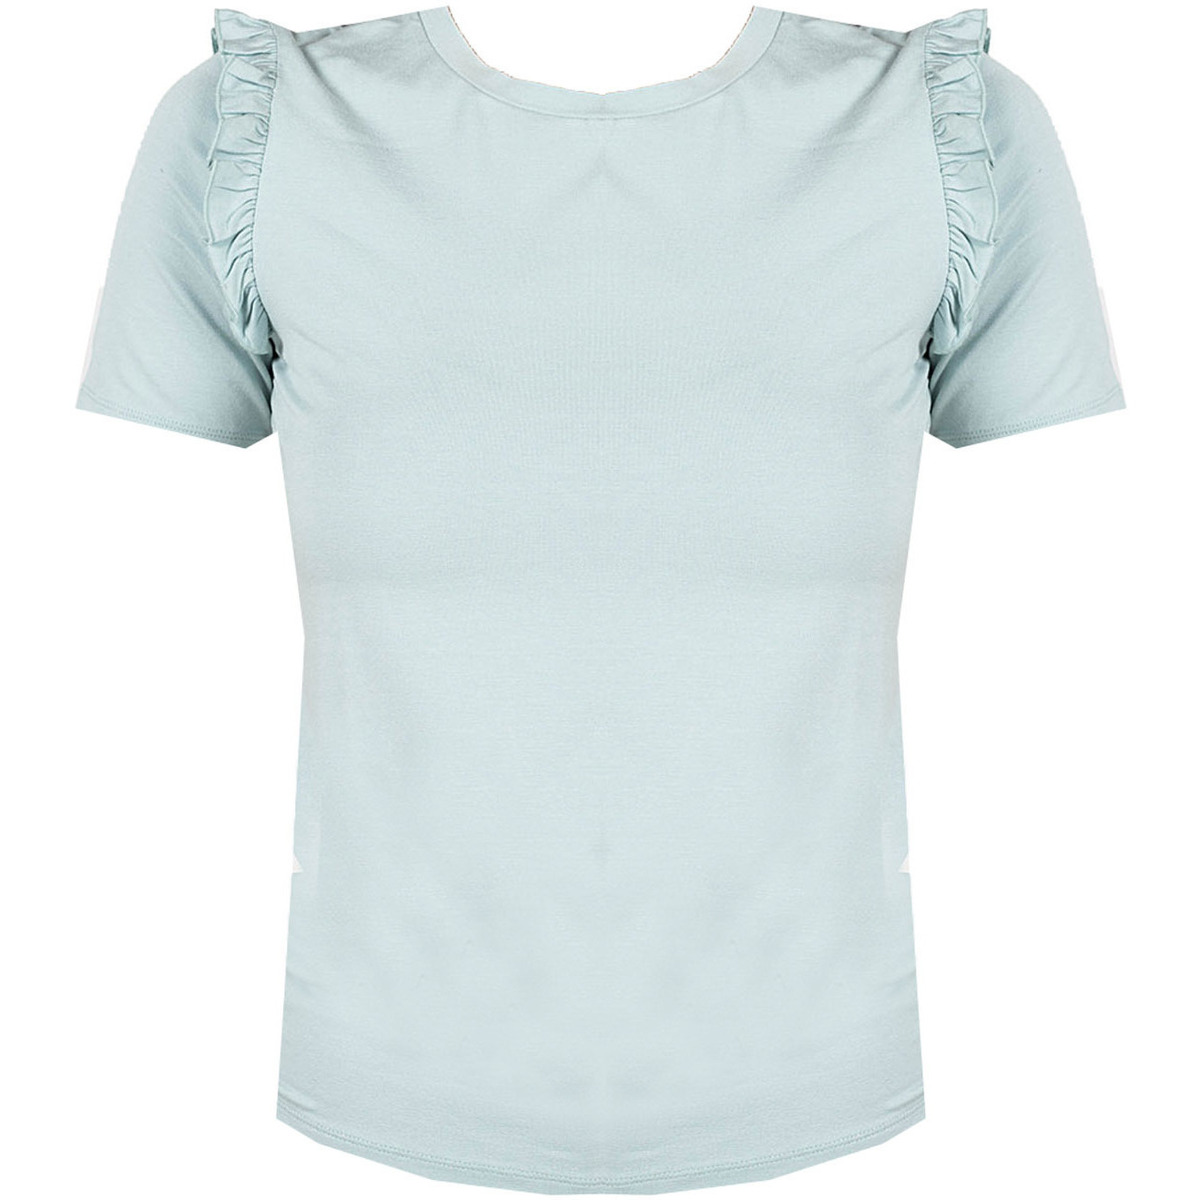 Textiel Dames T-shirts korte mouwen Patrizia Pepe DM3623 A13 Blauw